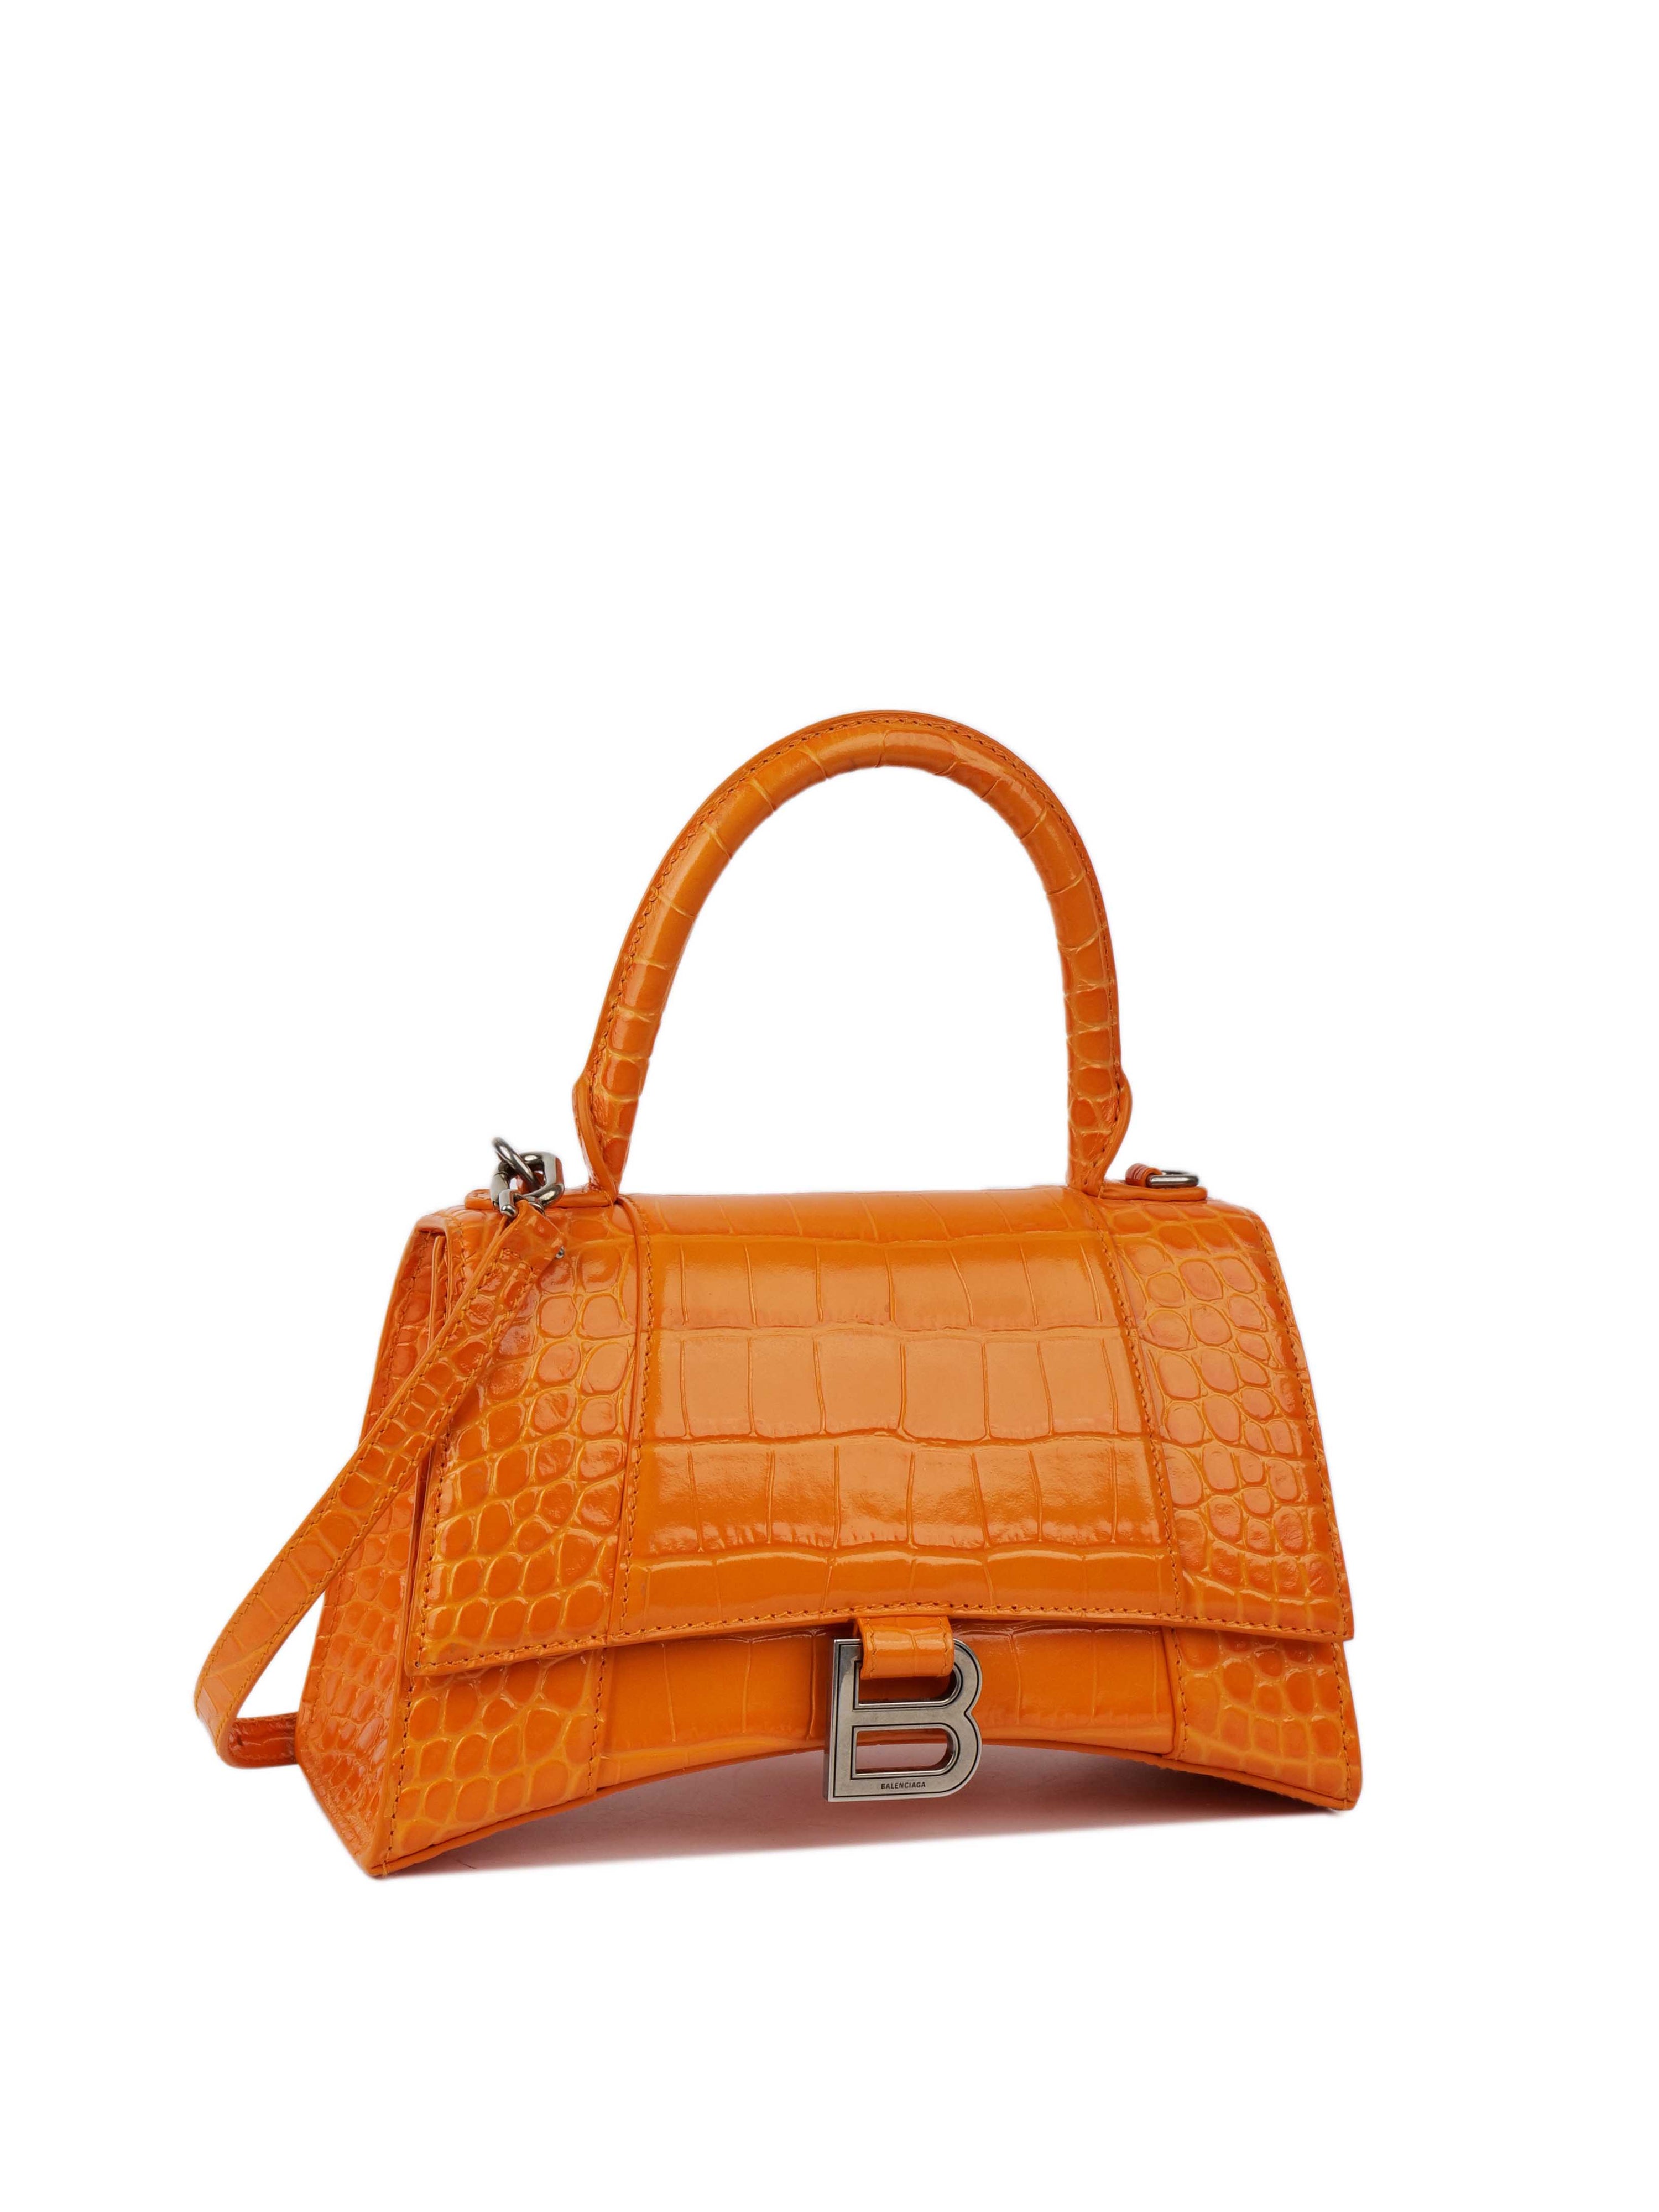 Balenciaga Small Orange Hourglass Bag.